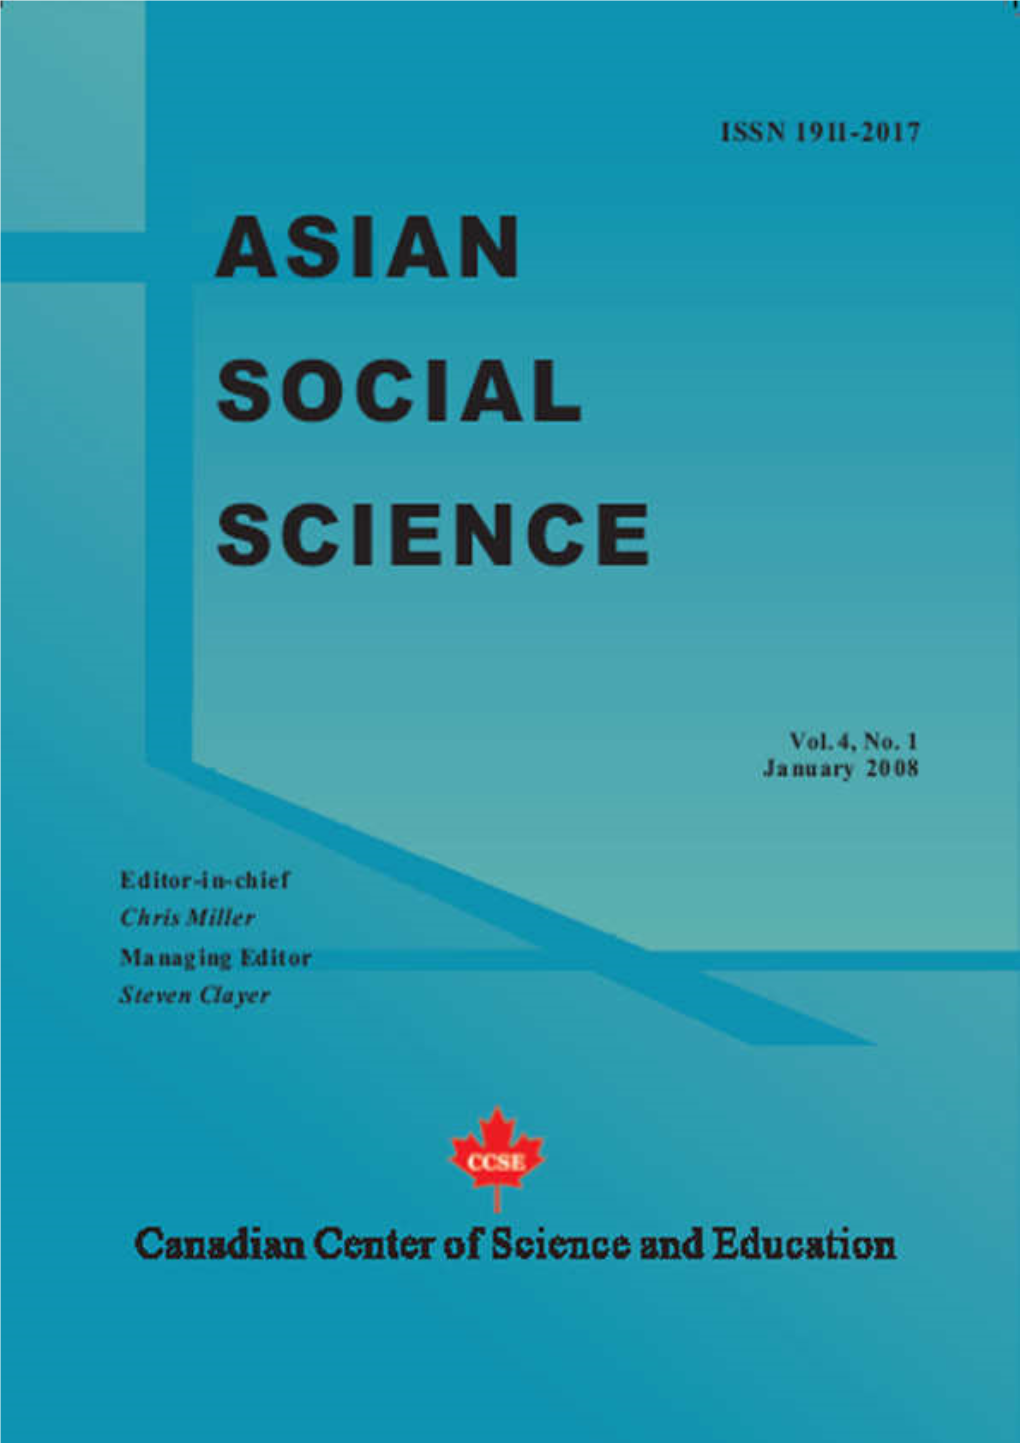 Asian Social Science, ISSN 1911-2017, Vol. 4, No. 1, January